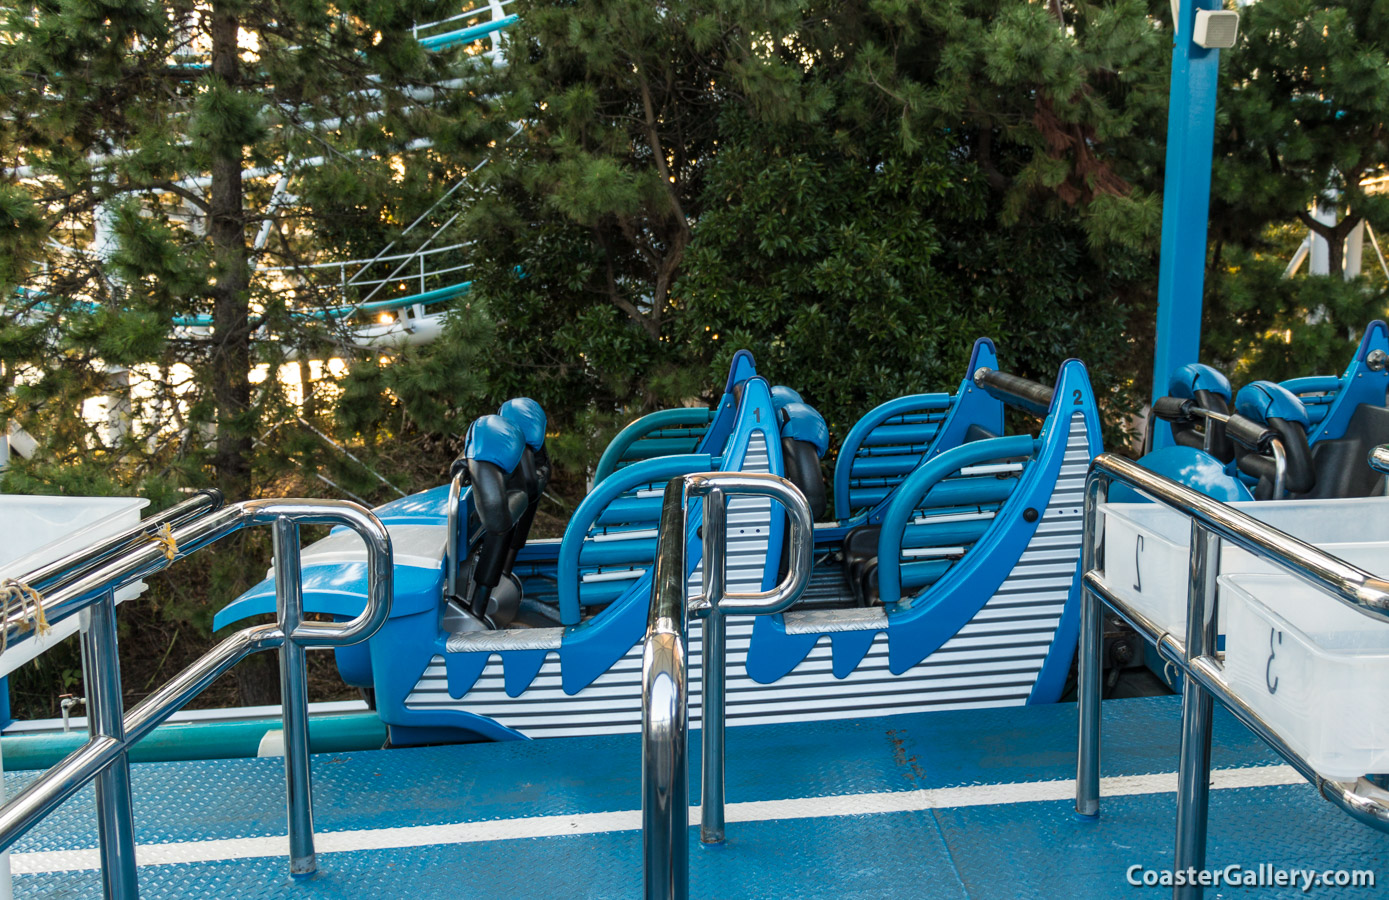 Lapbar restraints on the Surf Coaster Leviathan